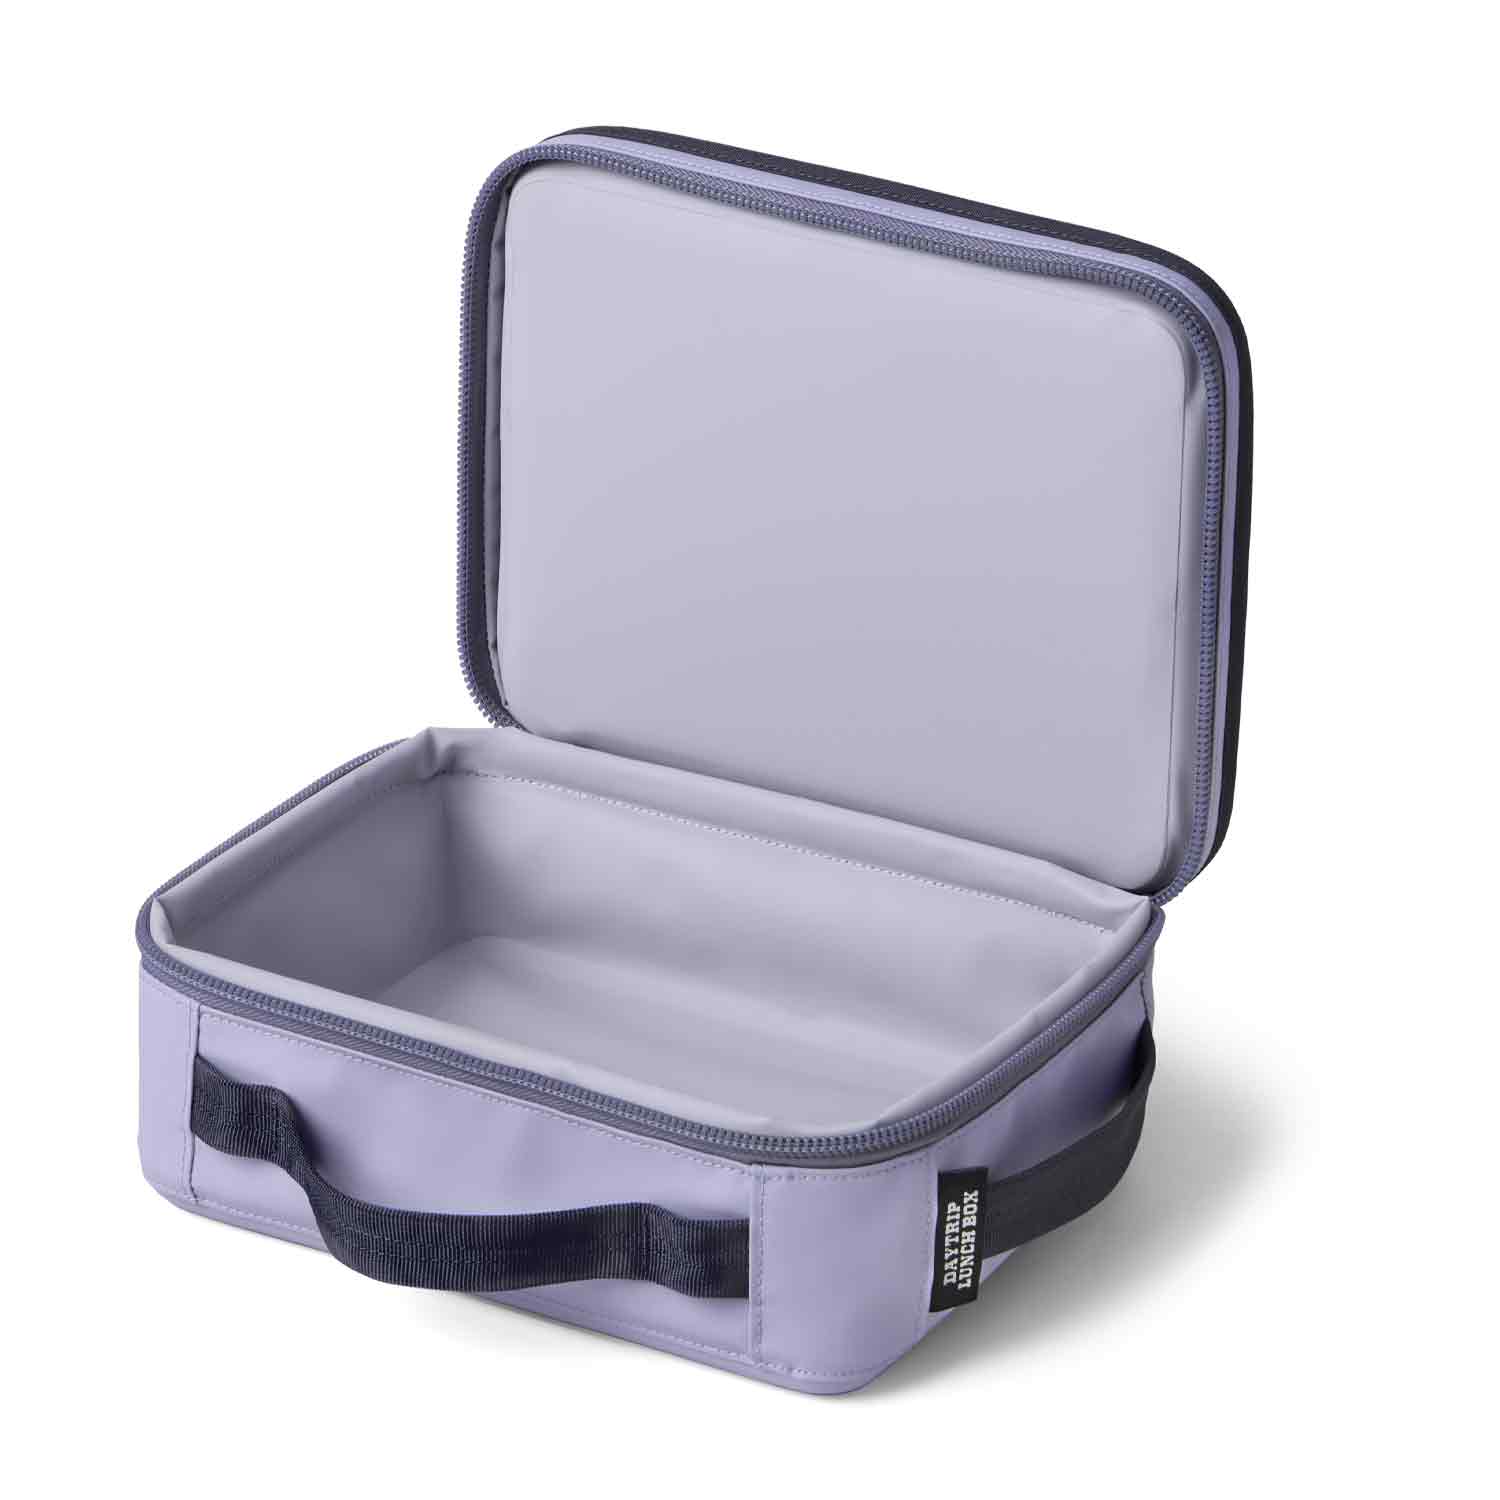 Yeti Daytrip Lunch Box Cosmic Lilac – Lancaster Archery Supply